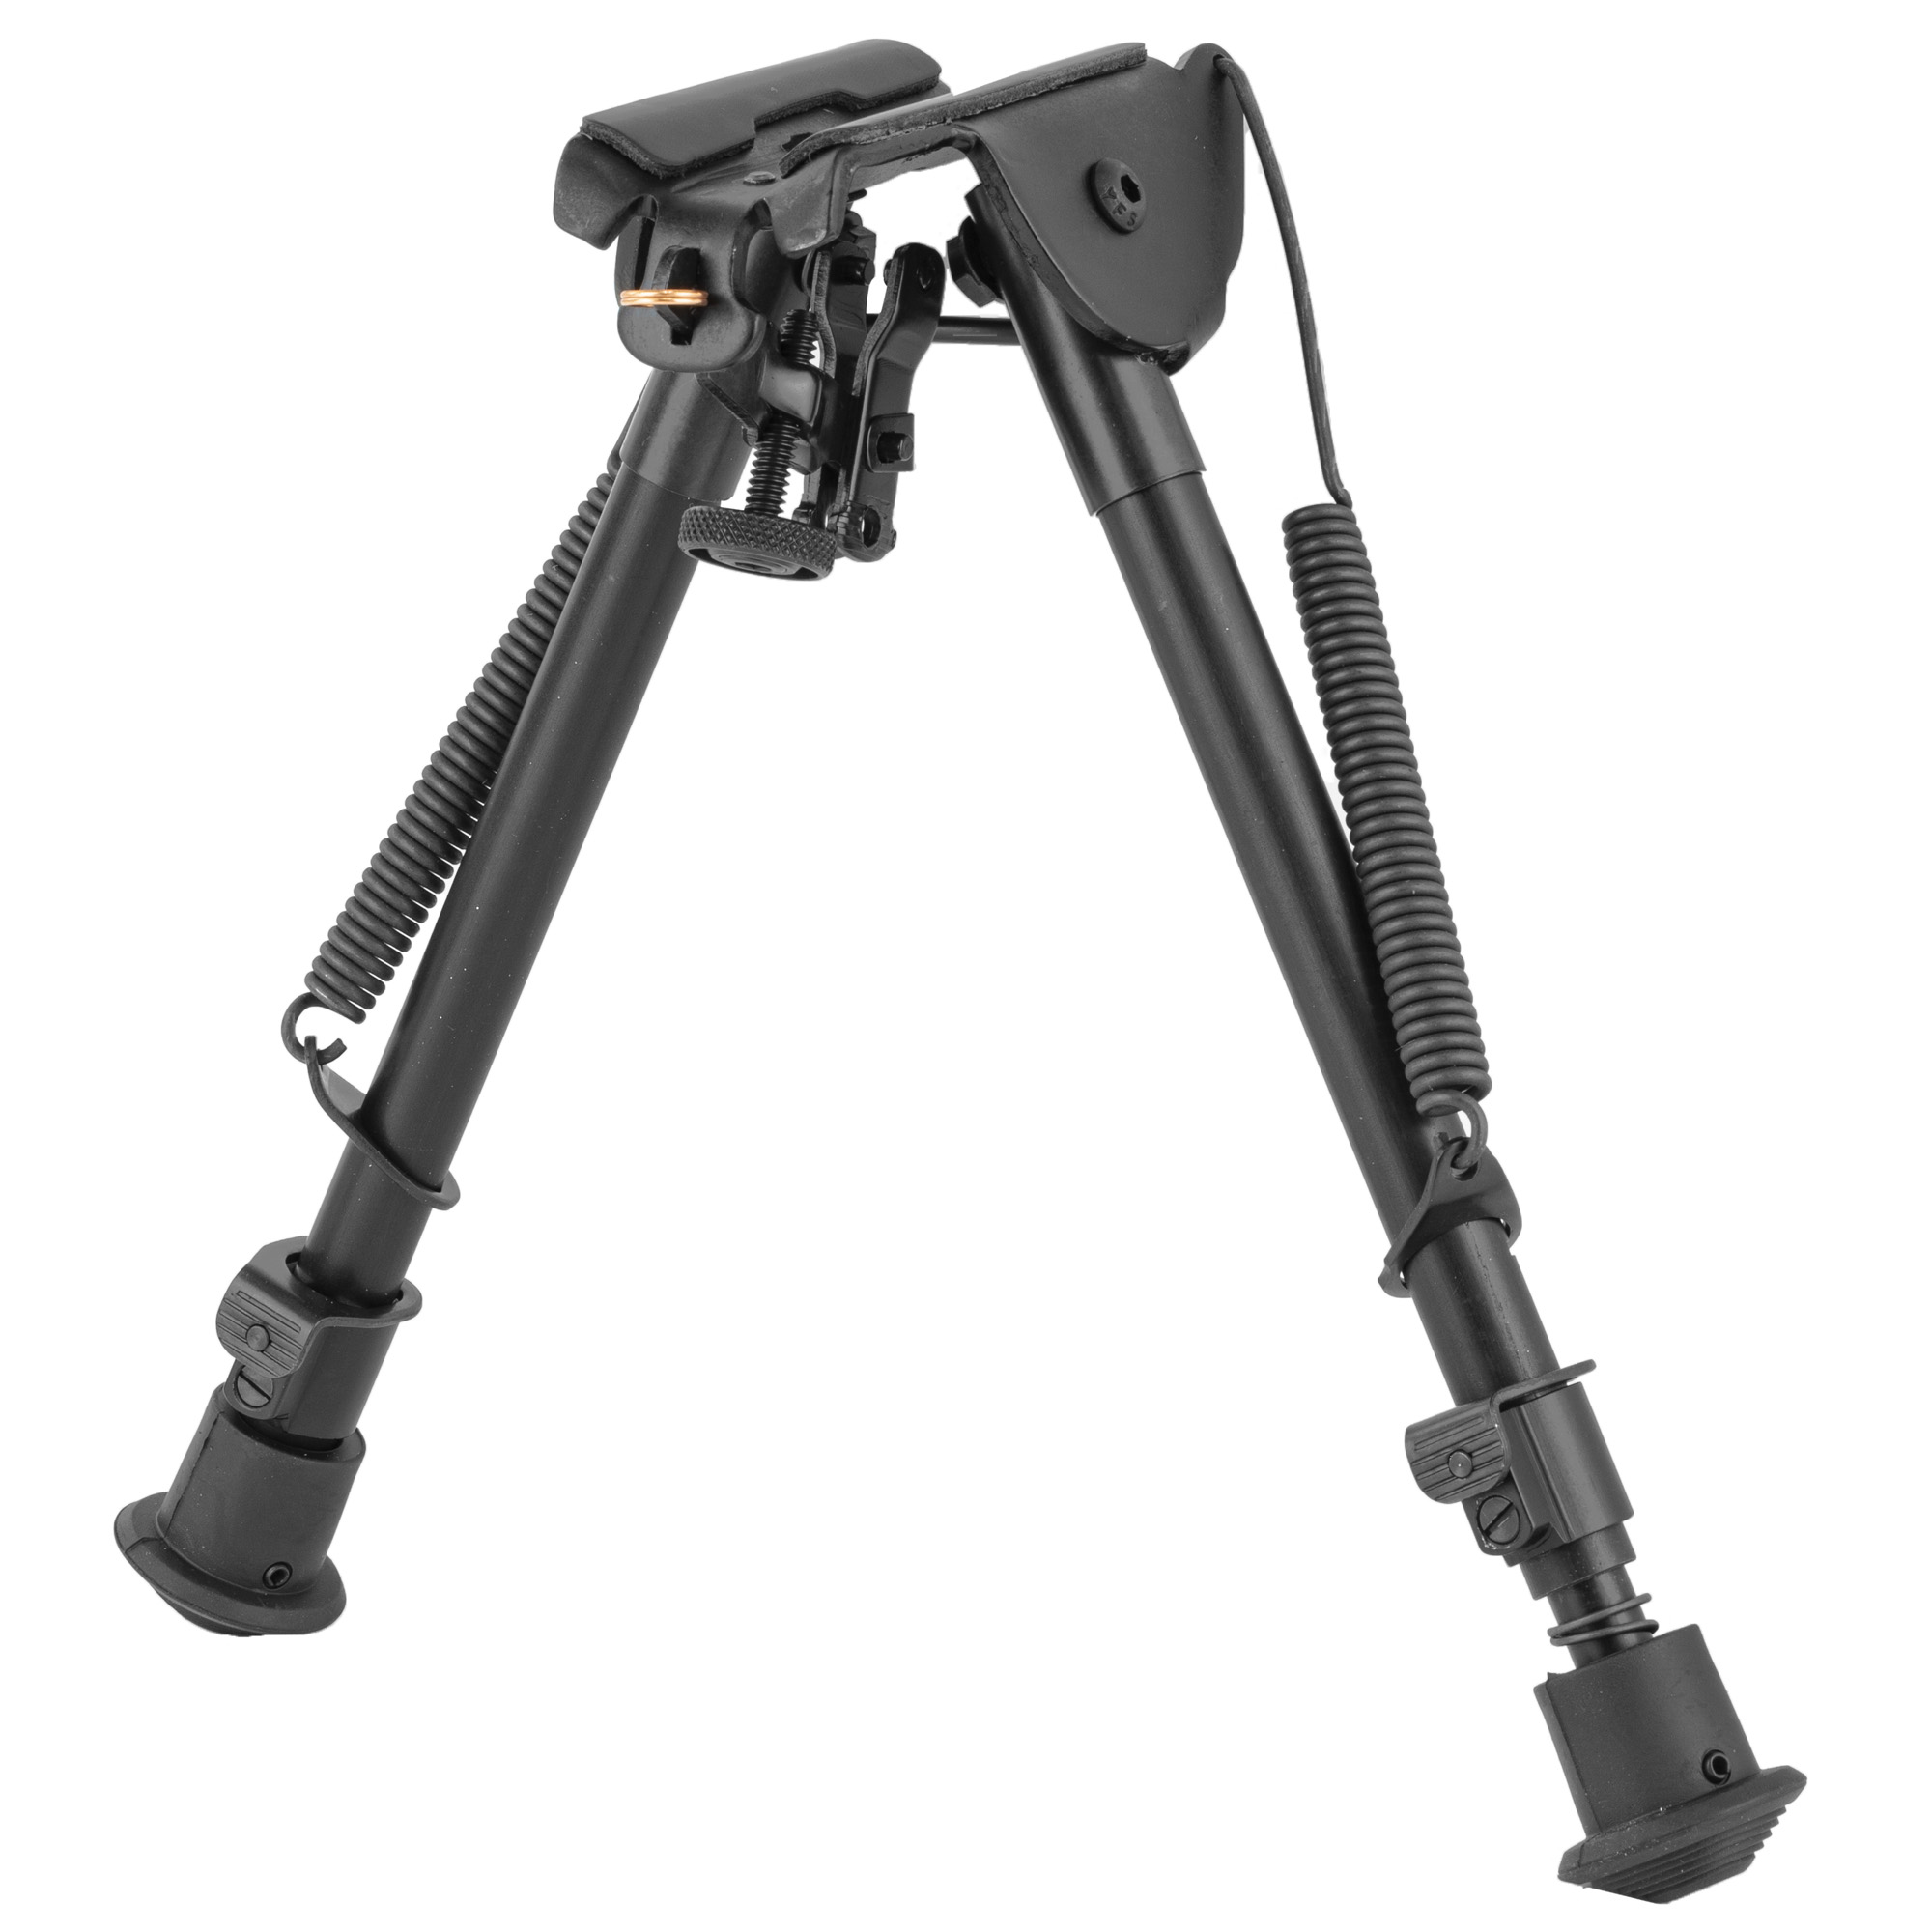 Harris Ultra-light Bipod Notched Legs Sling Swivel Stud Mount 9" to 13" Telescoping/Folding Legs, Aluminum Matte Black, 1A2-LM,